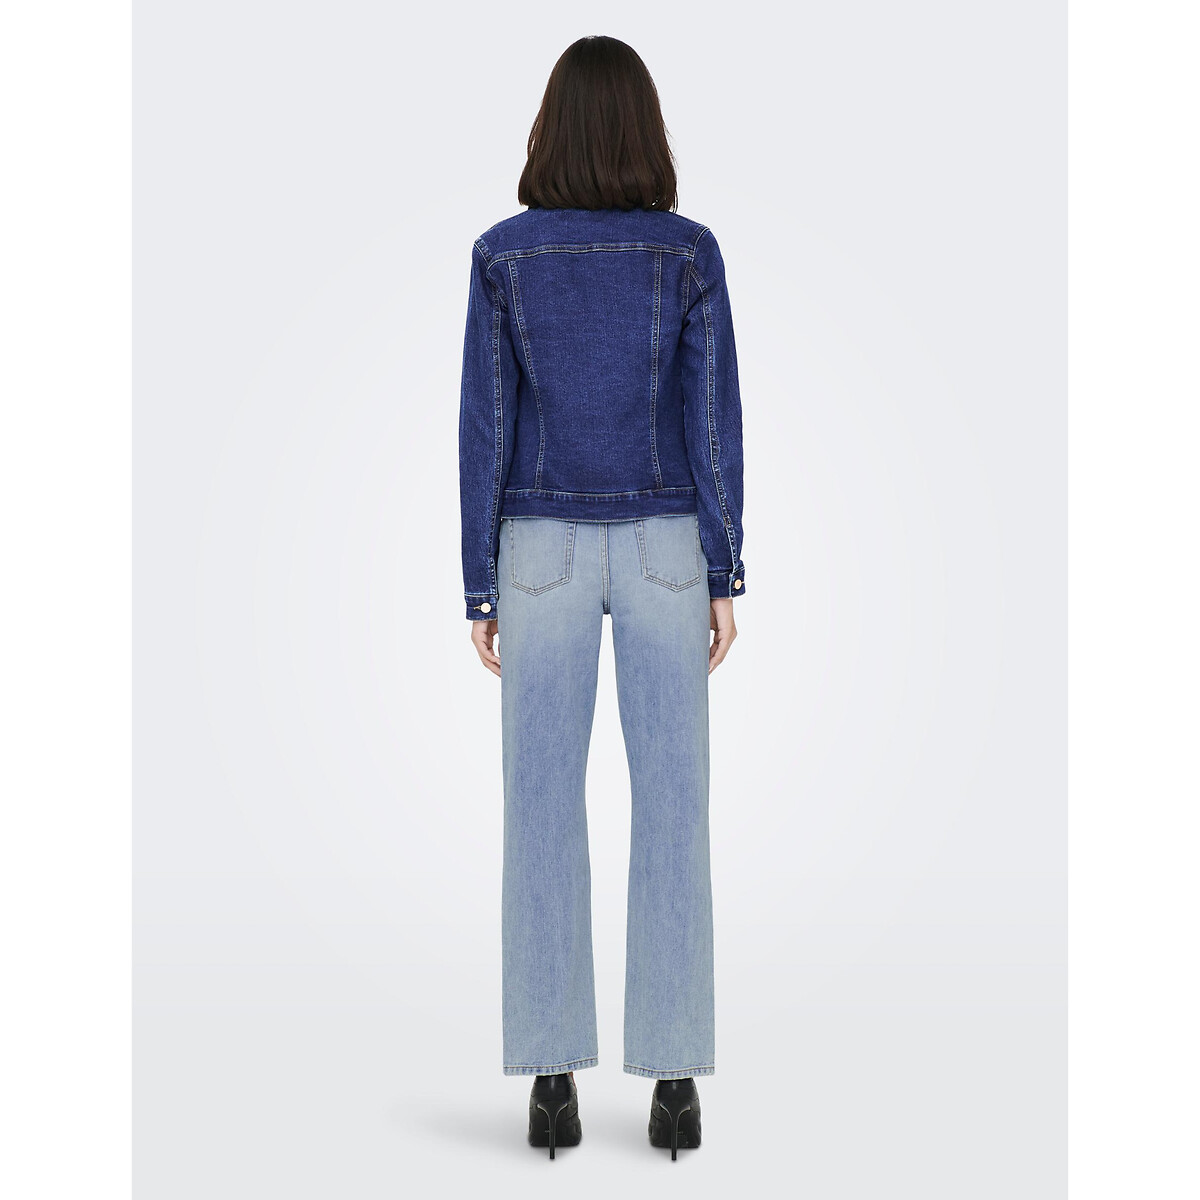 Жакет Из джинсовой ткани XS синий LaRedoute, размер XS - фото 4